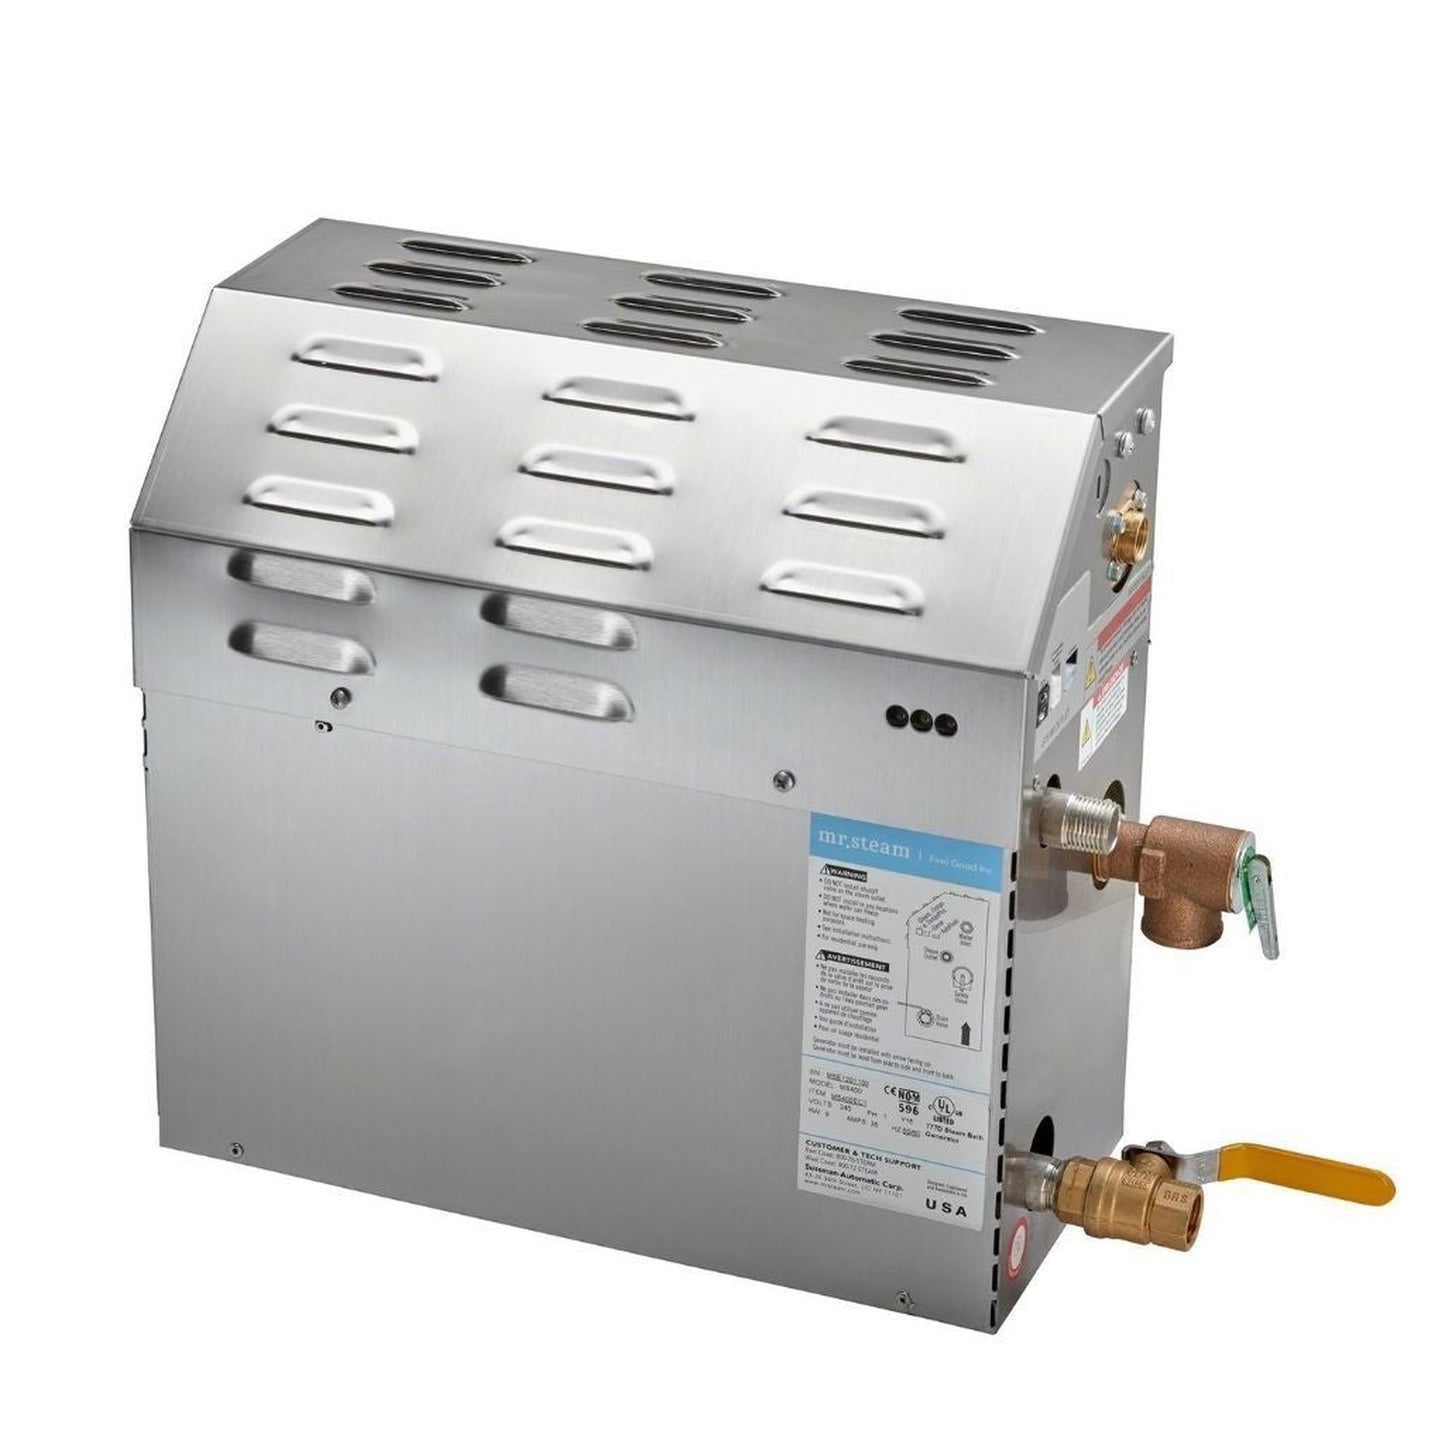 MrSteam e-SERIES MS90EC1 5 kW Steam Bath Generator With iTempo Polished Chrome Control